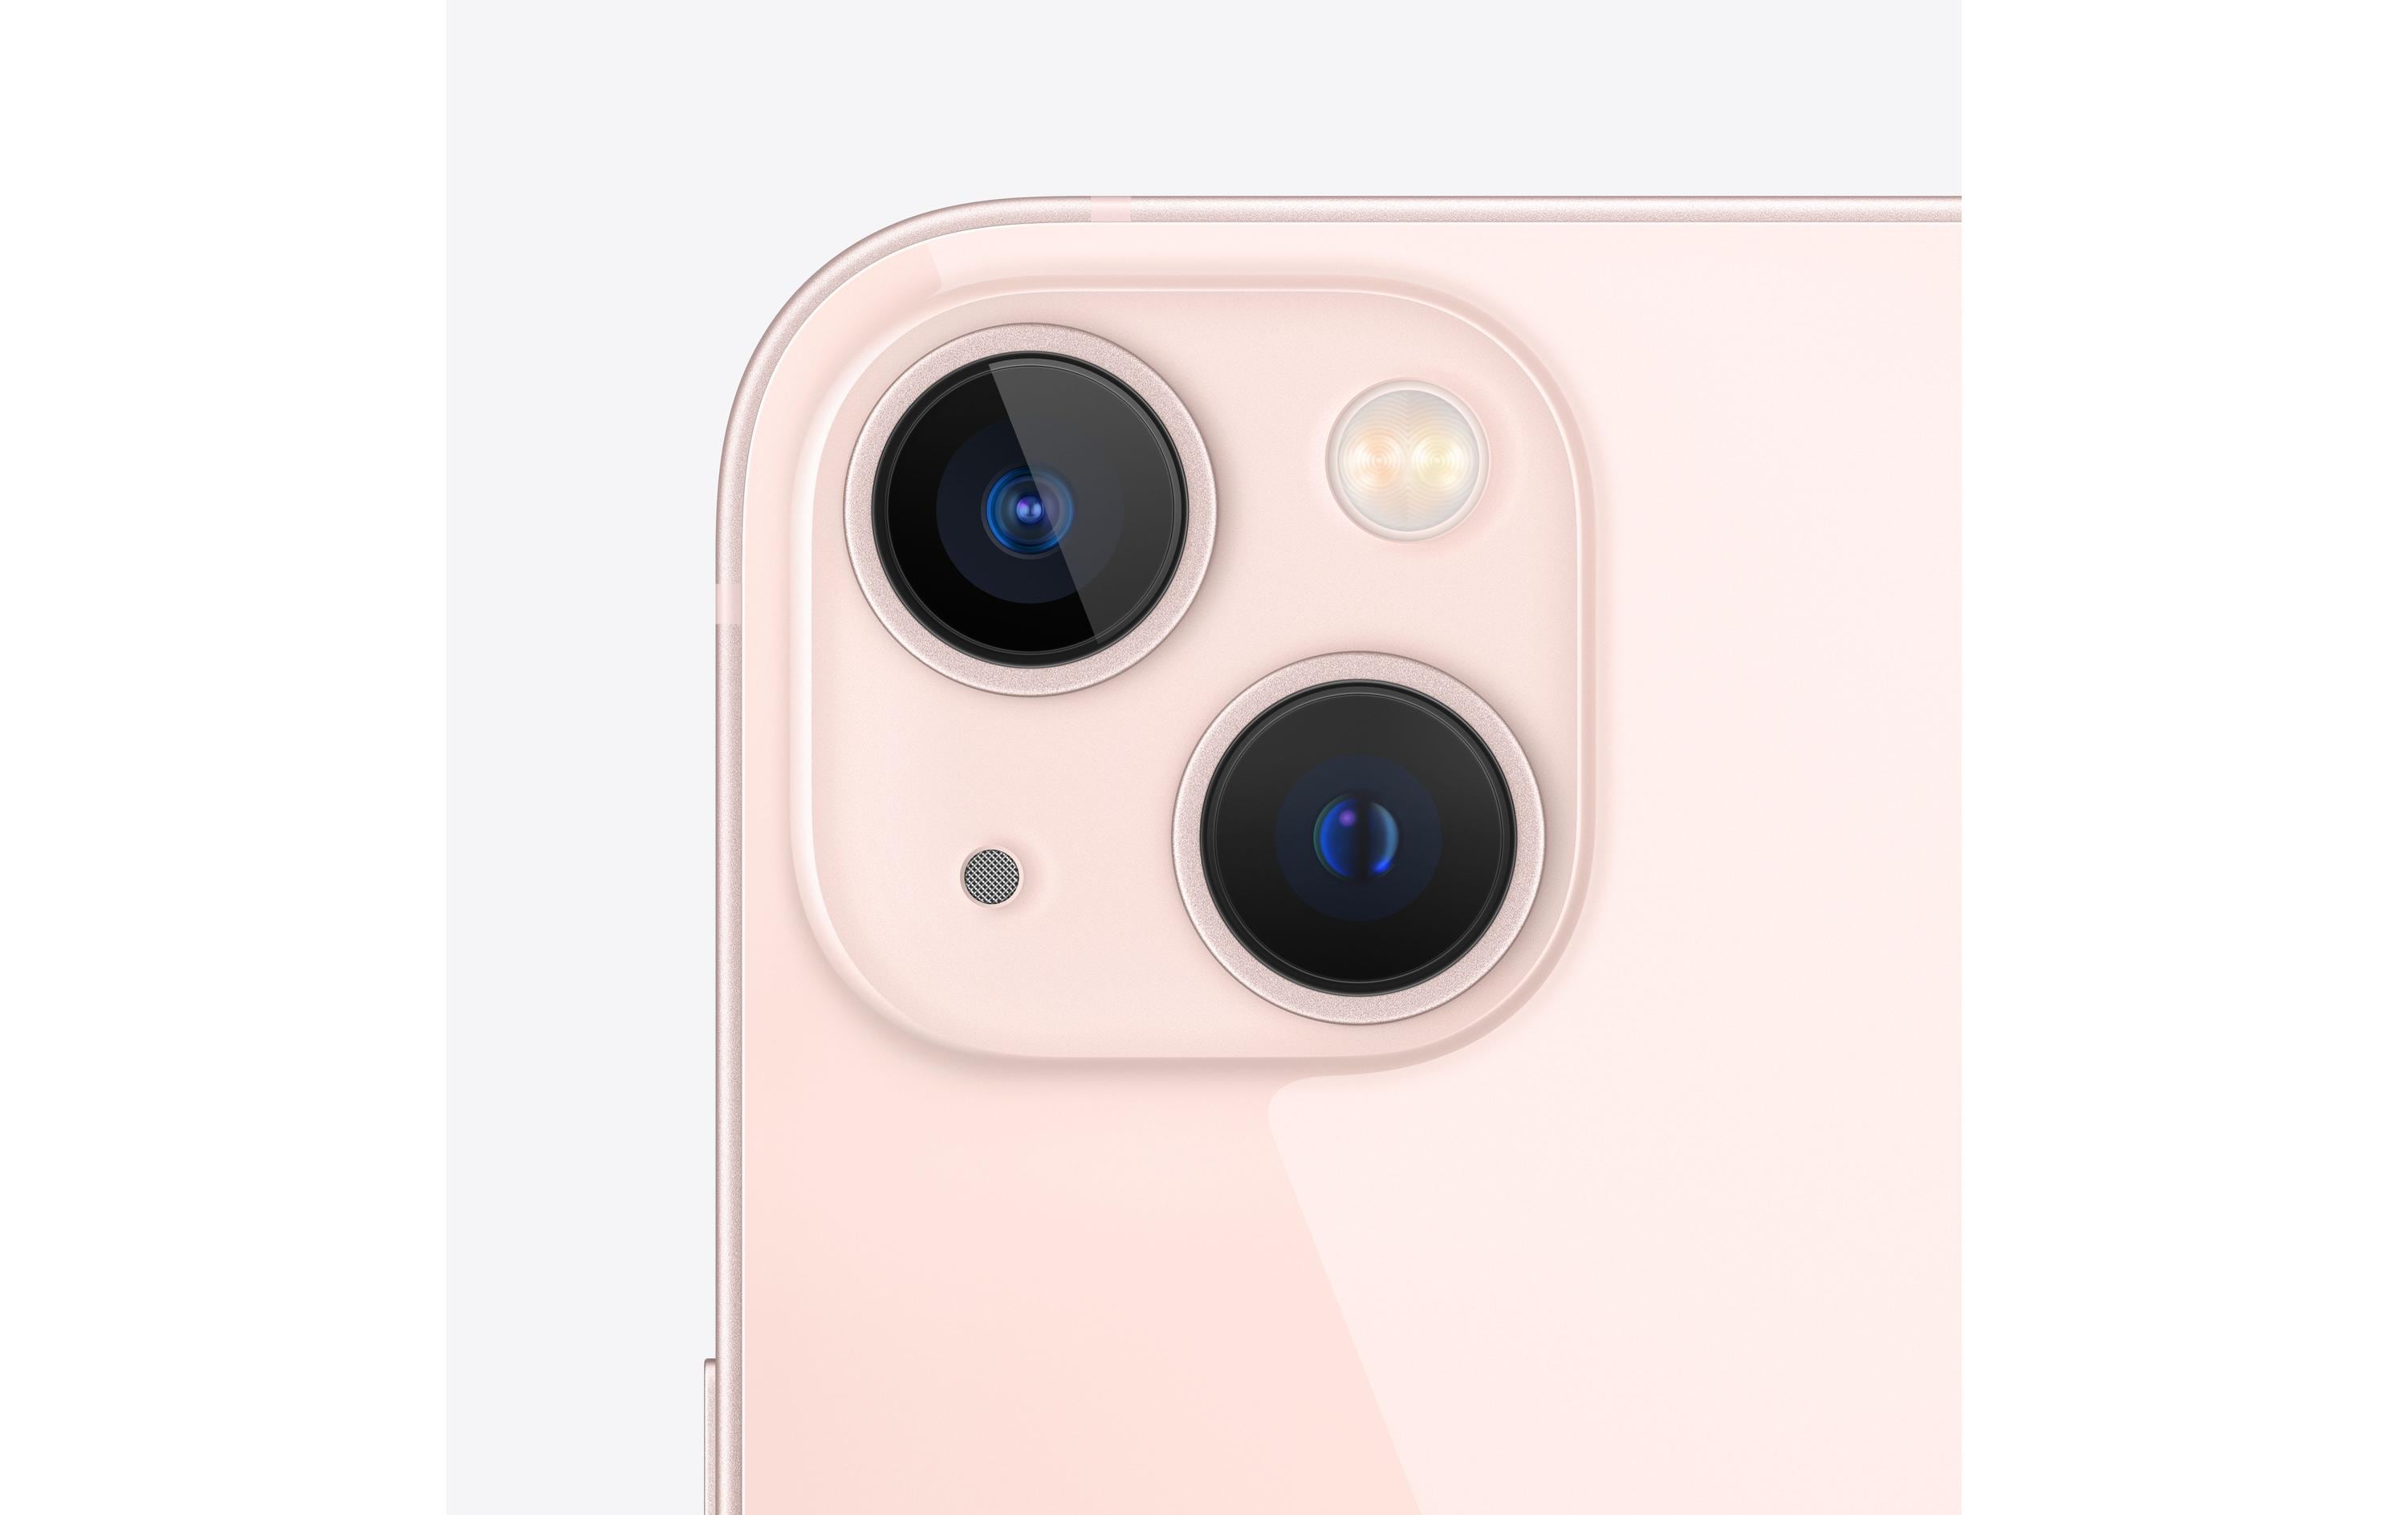 Apple iPhone 13 128GB Rosé